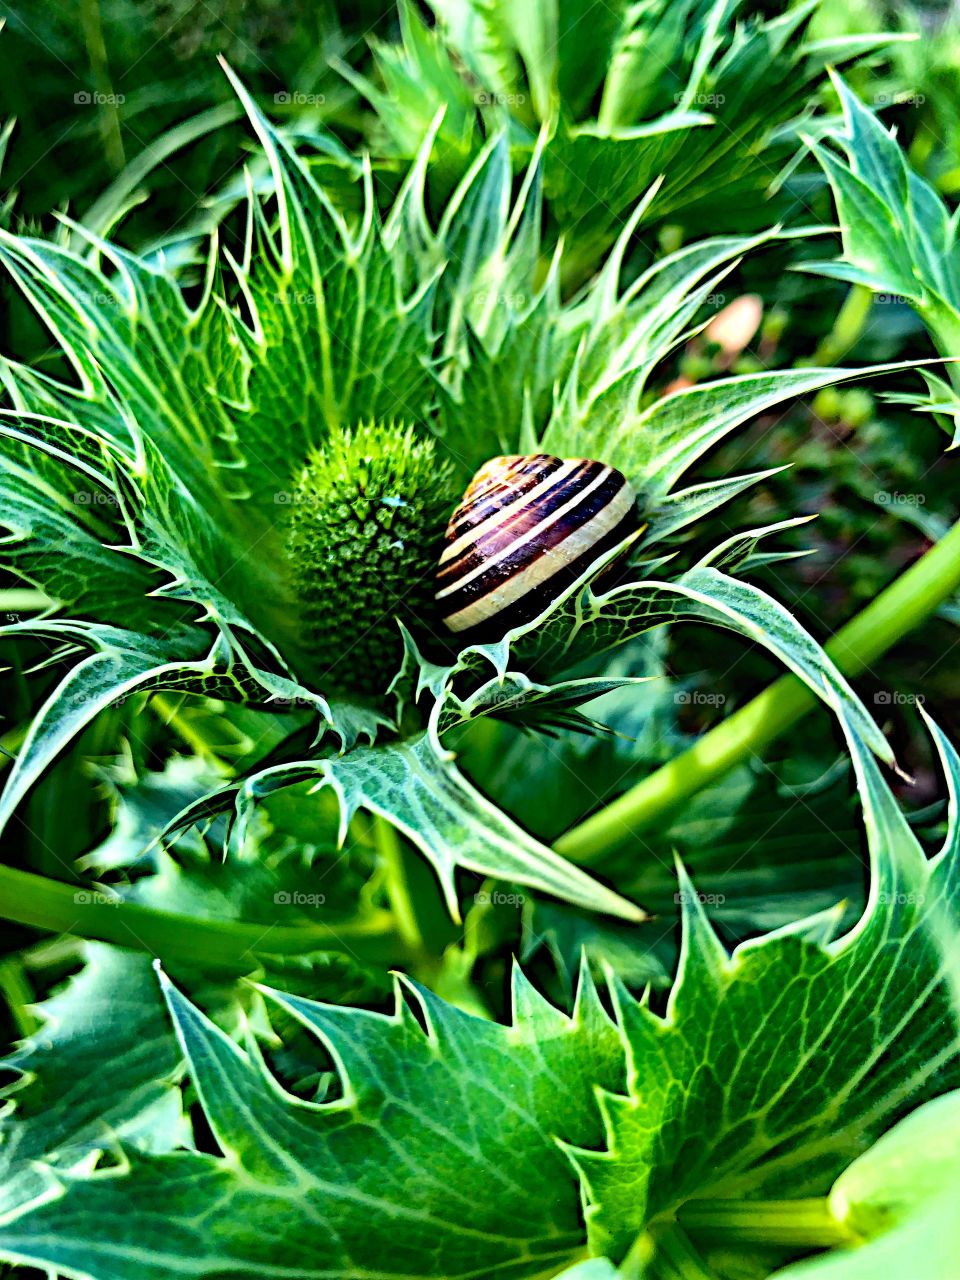 Snail shell in the green flower! 